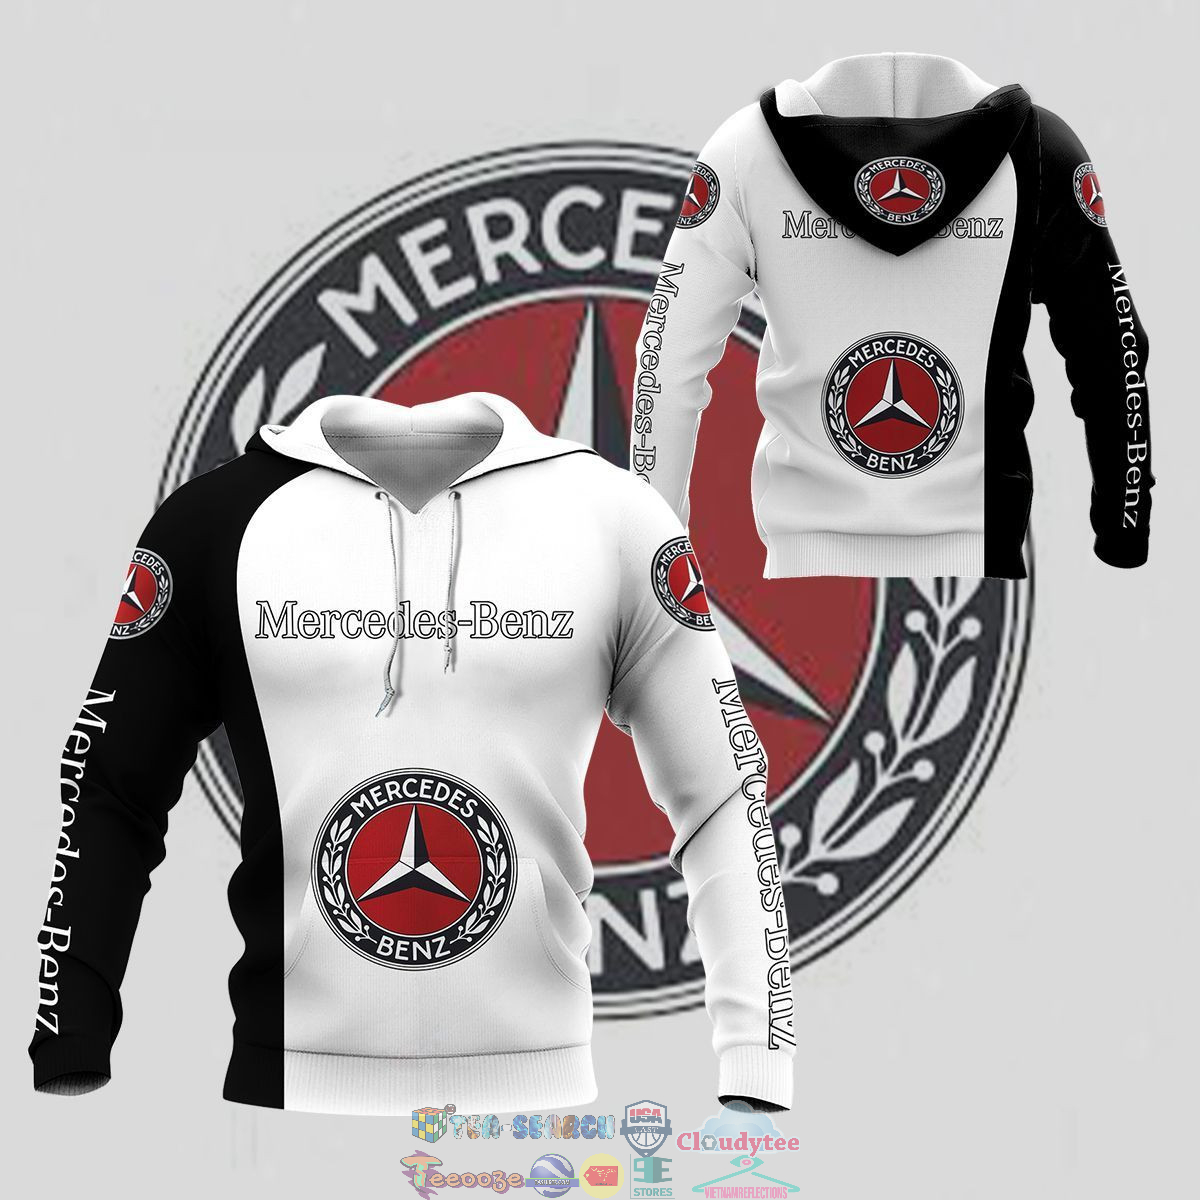 Mercedes-Benz ver 4 3D hoodie and t-shirt – Saleoff